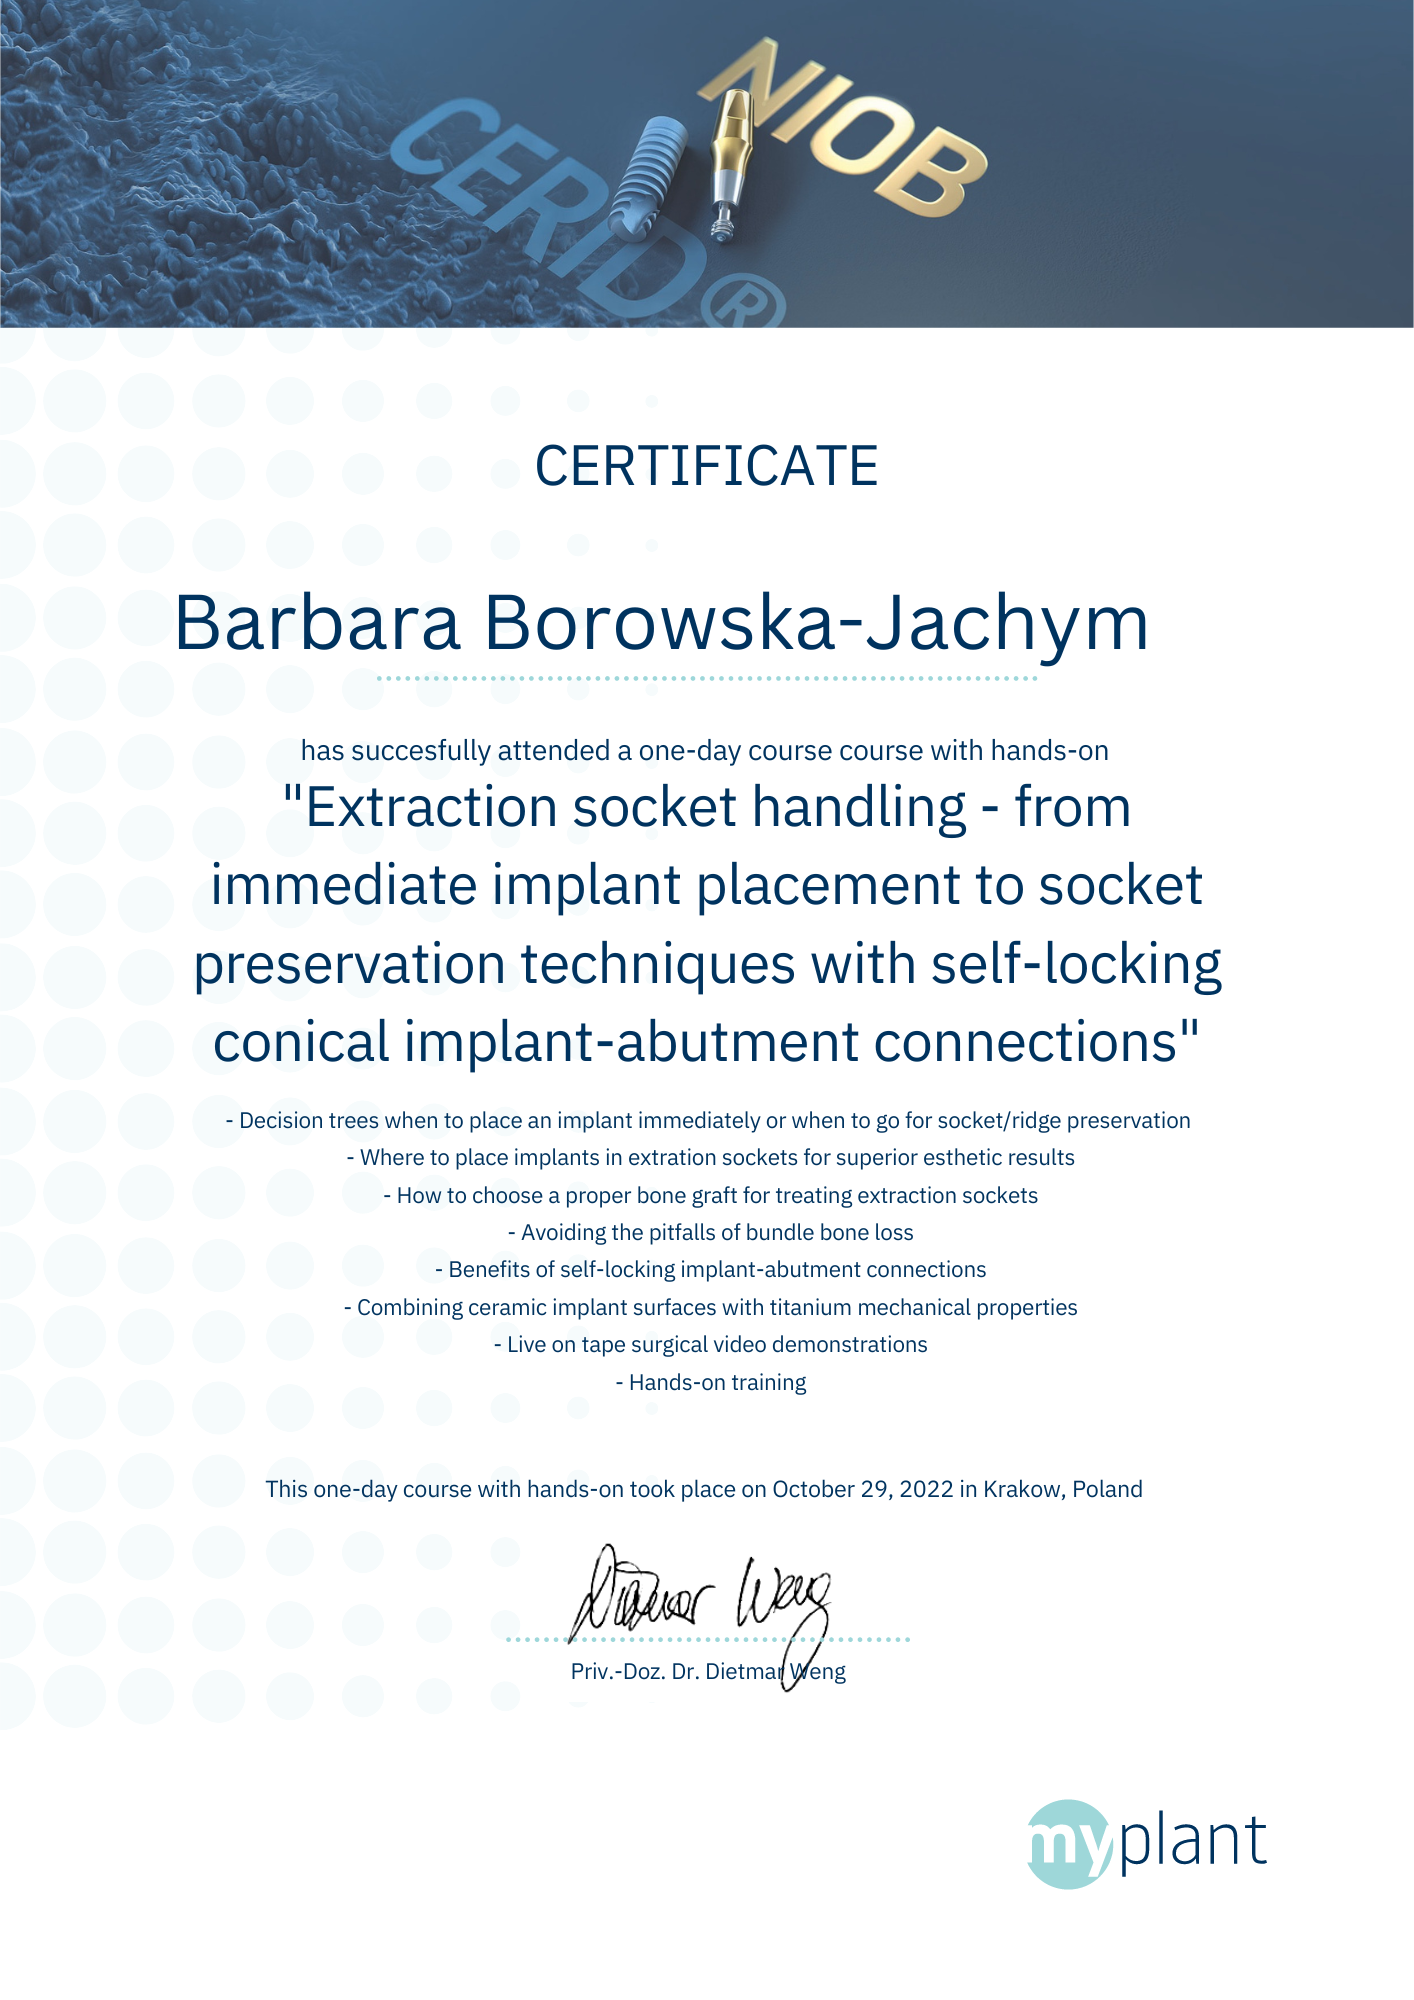 Certificate29.10.22_B. BorowskaJachym